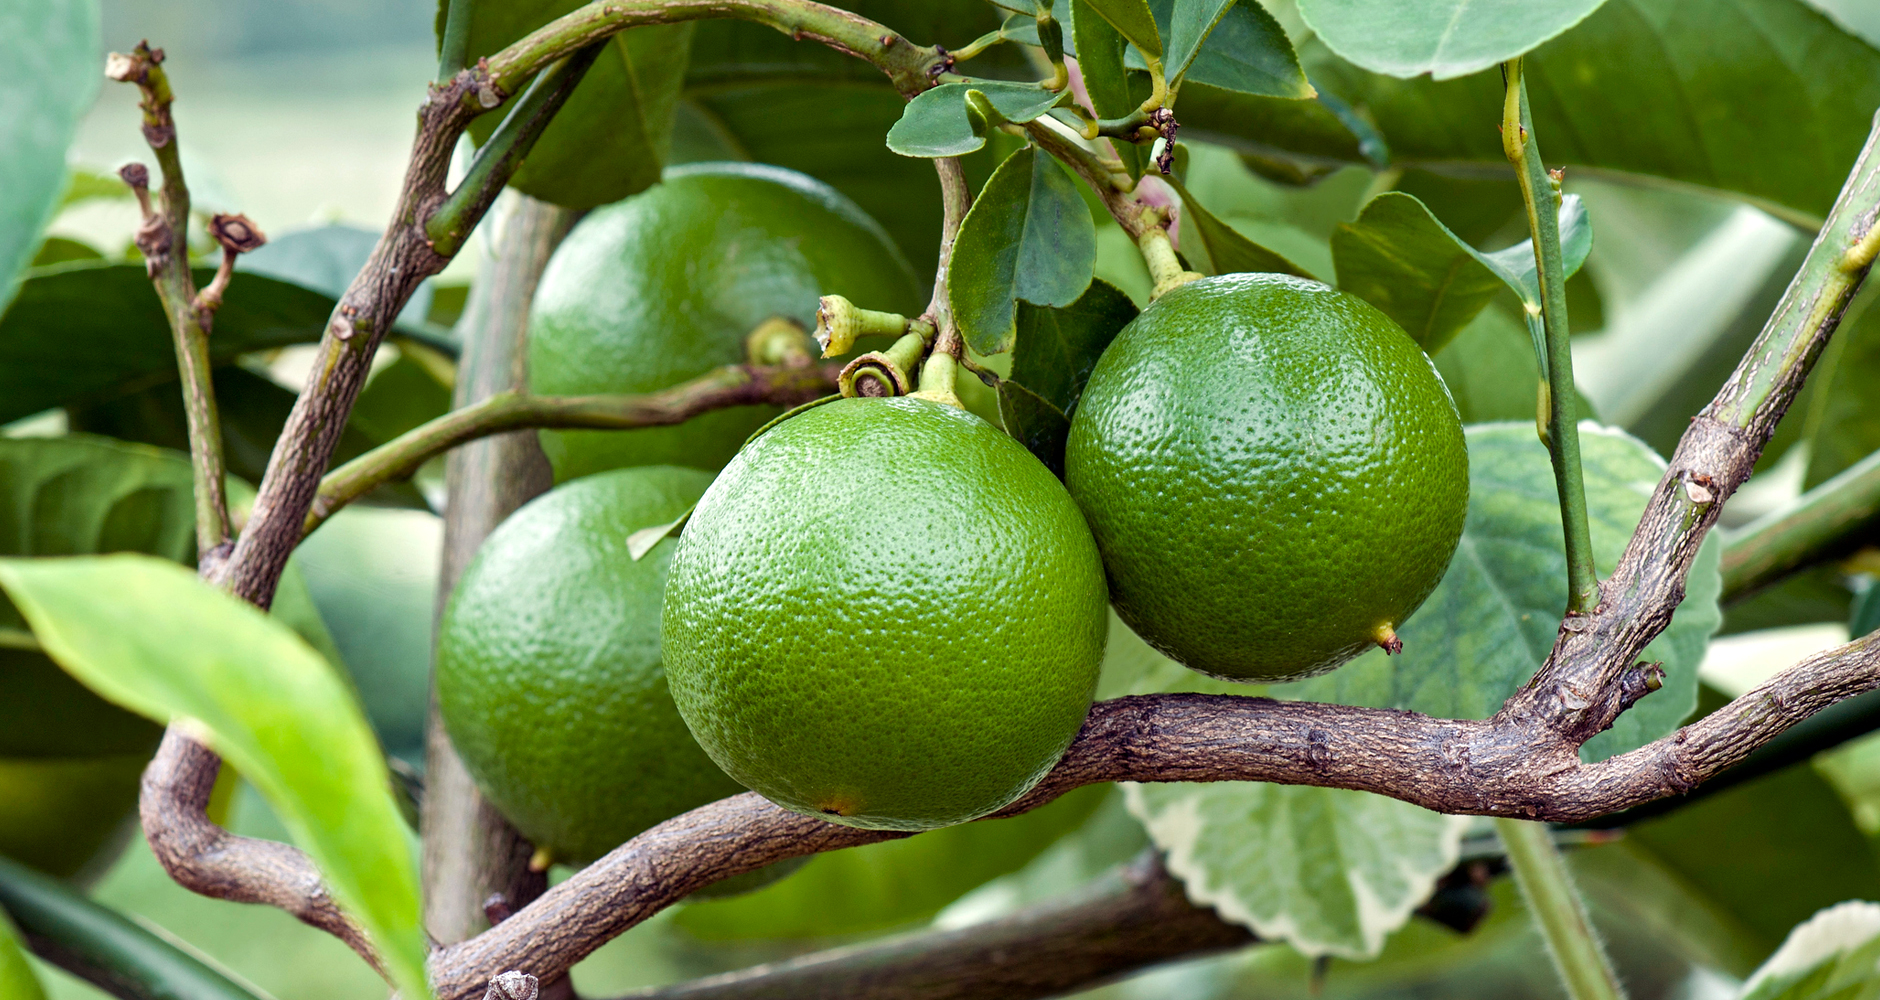 nimbuka  : Citrus acida, Citrus bergamia 